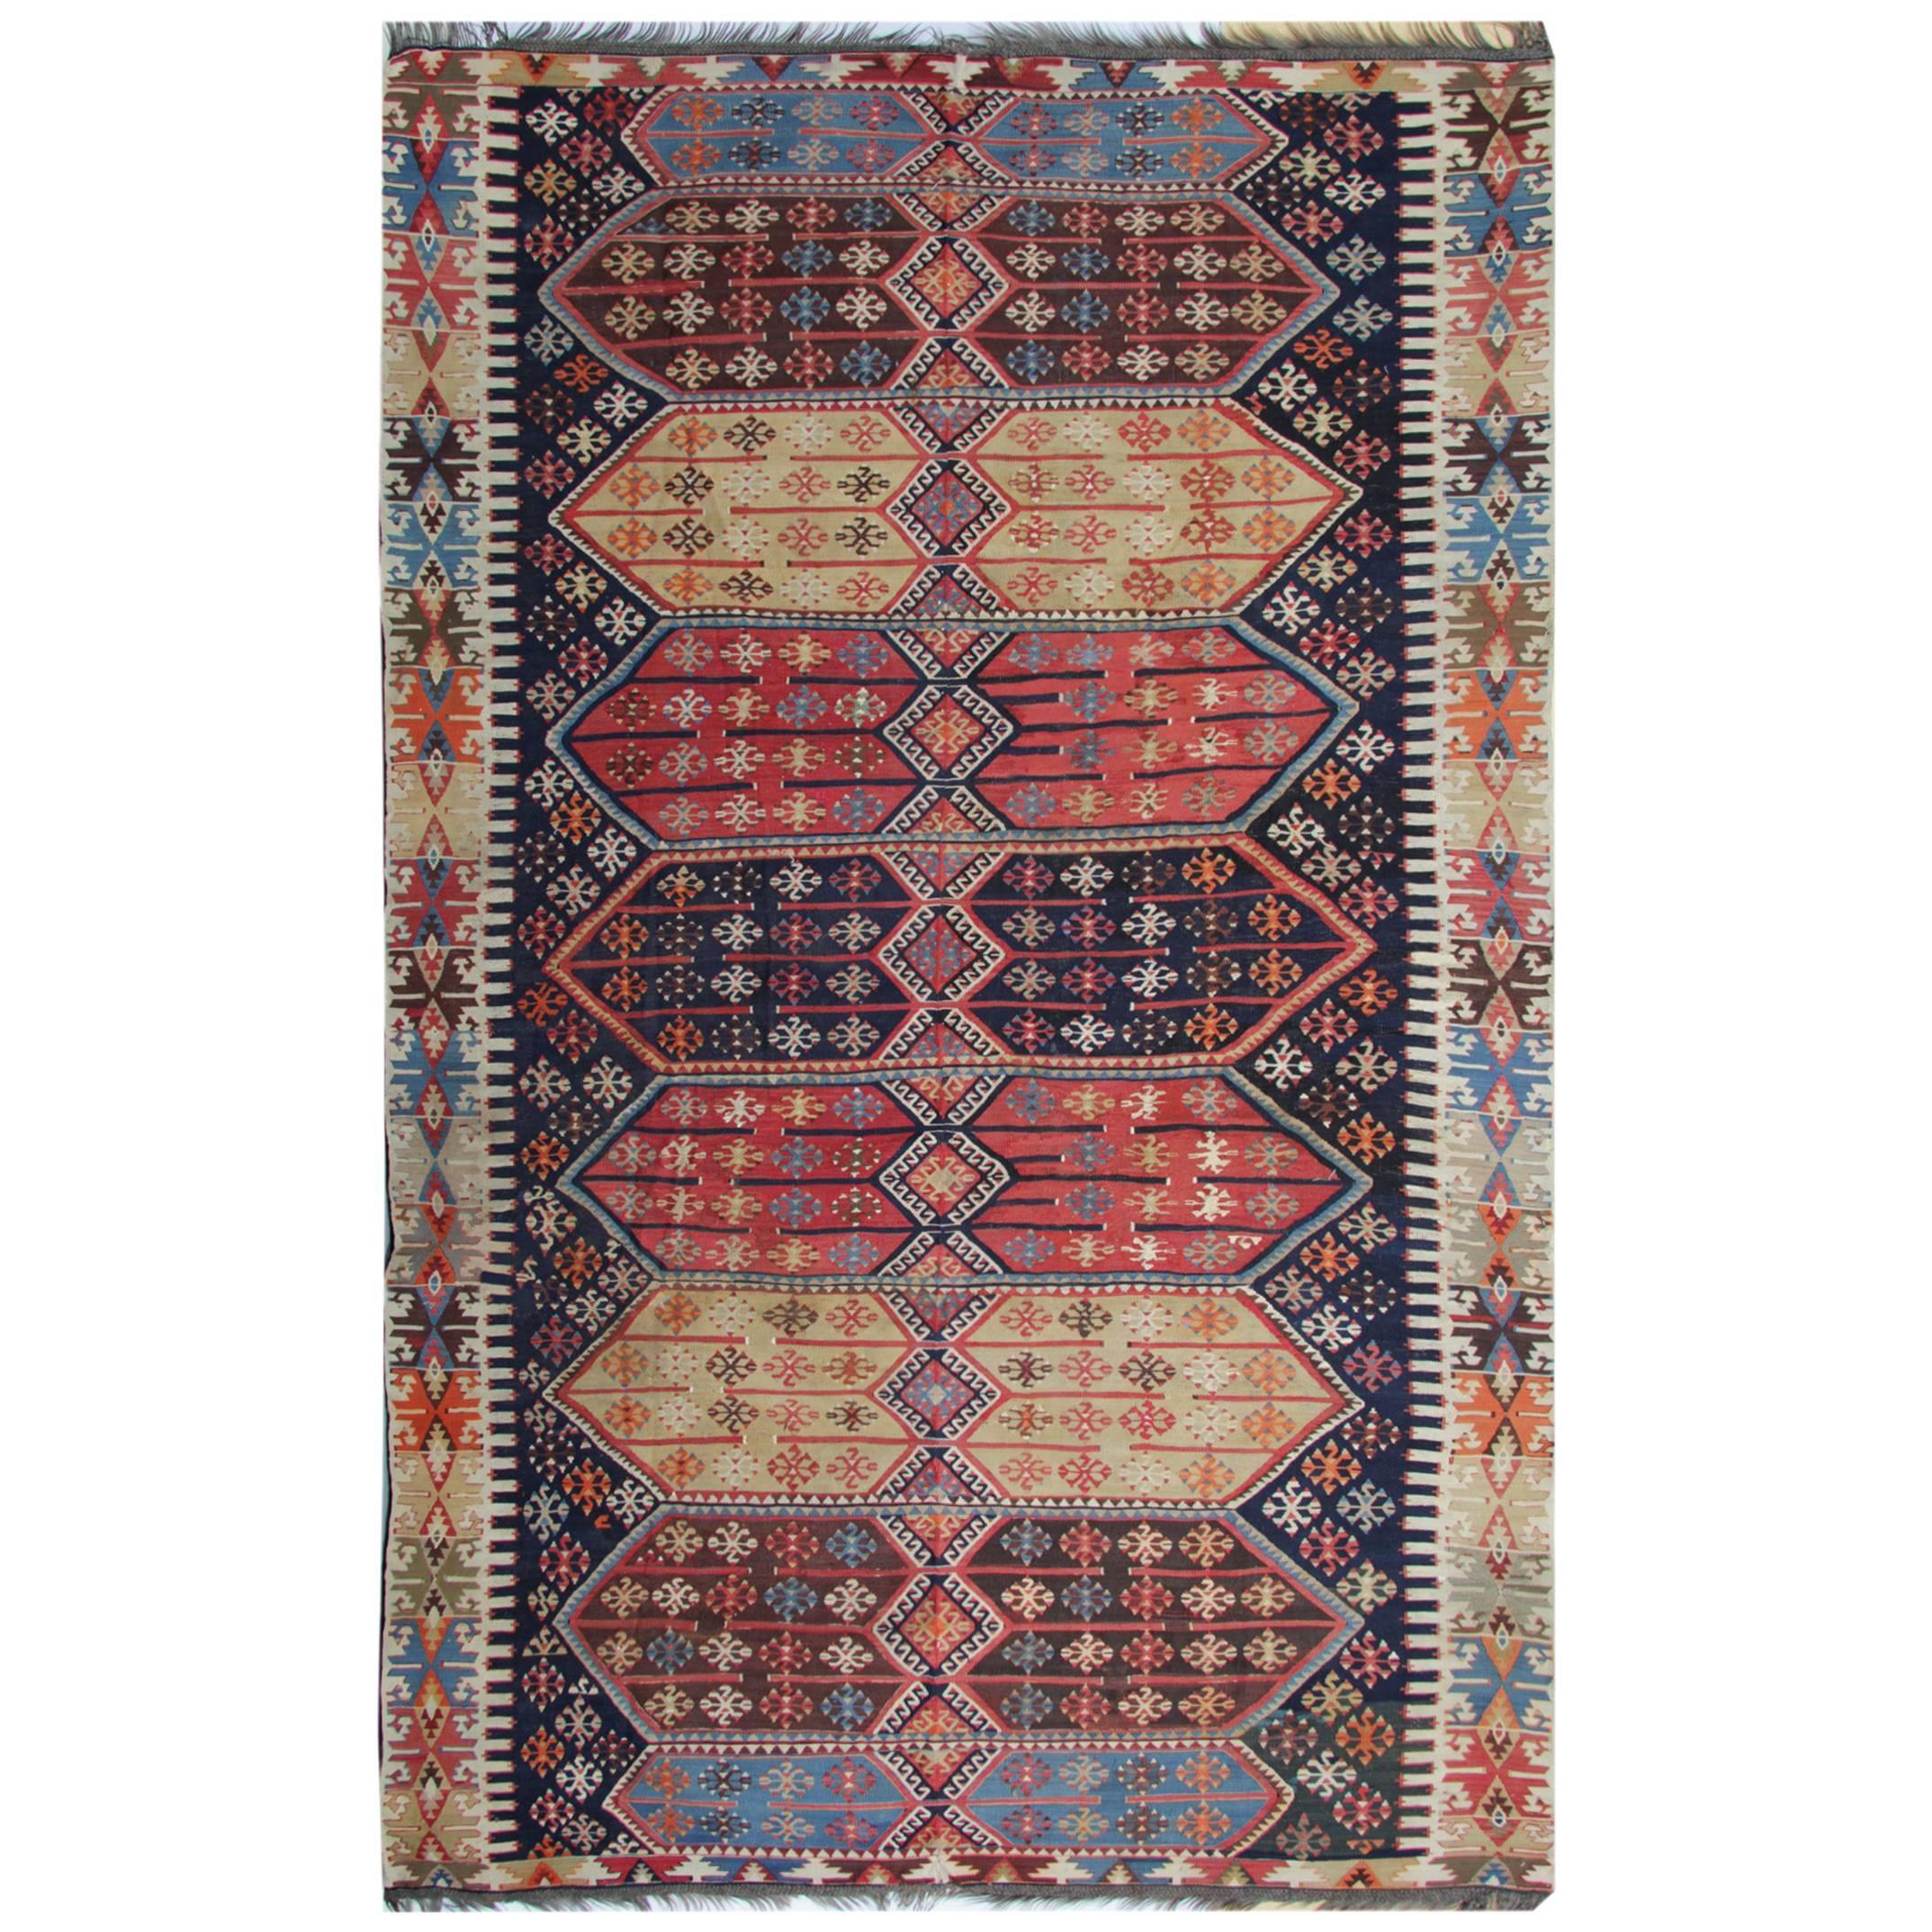 Turkish Rugs, Antique Rugs Kilims from Konya, Handmade Carpet Kilim Rug 